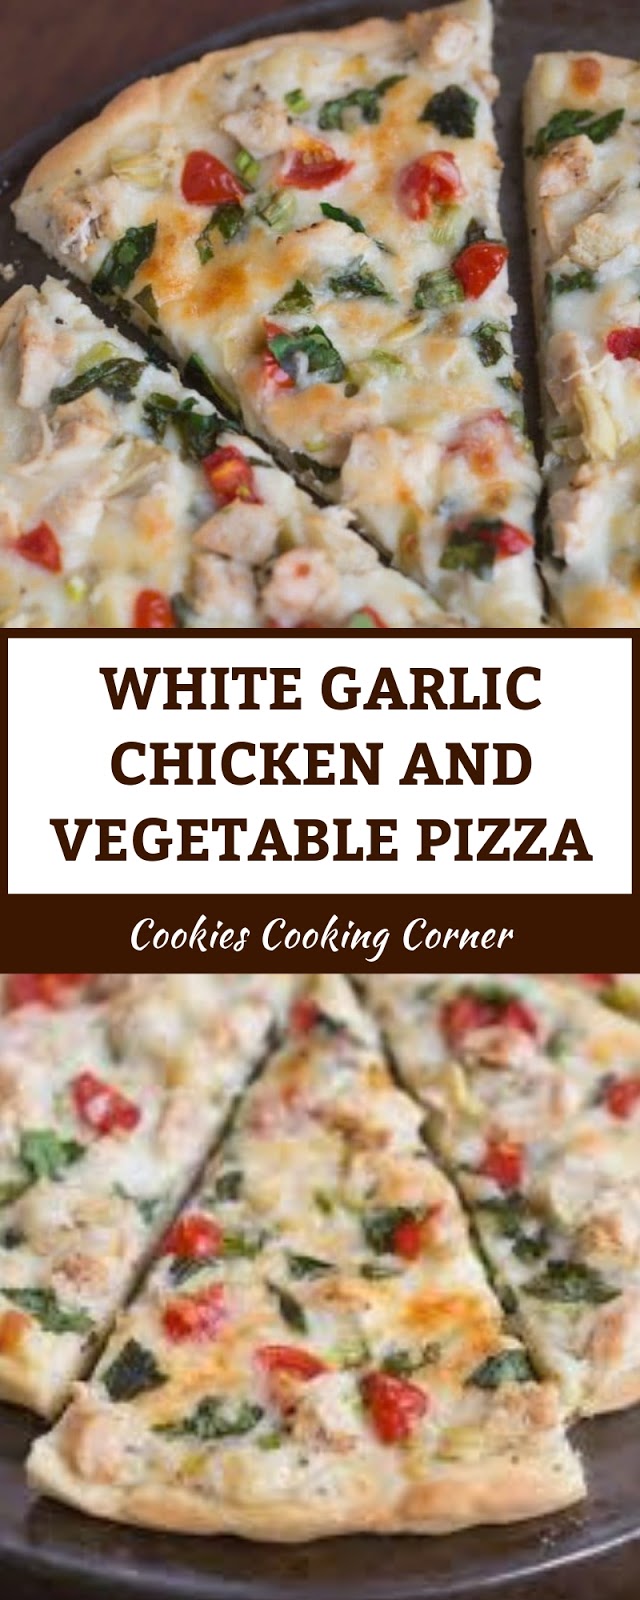 WHITE GARLIC CHICKEN AND VEGETABLE PIZZA